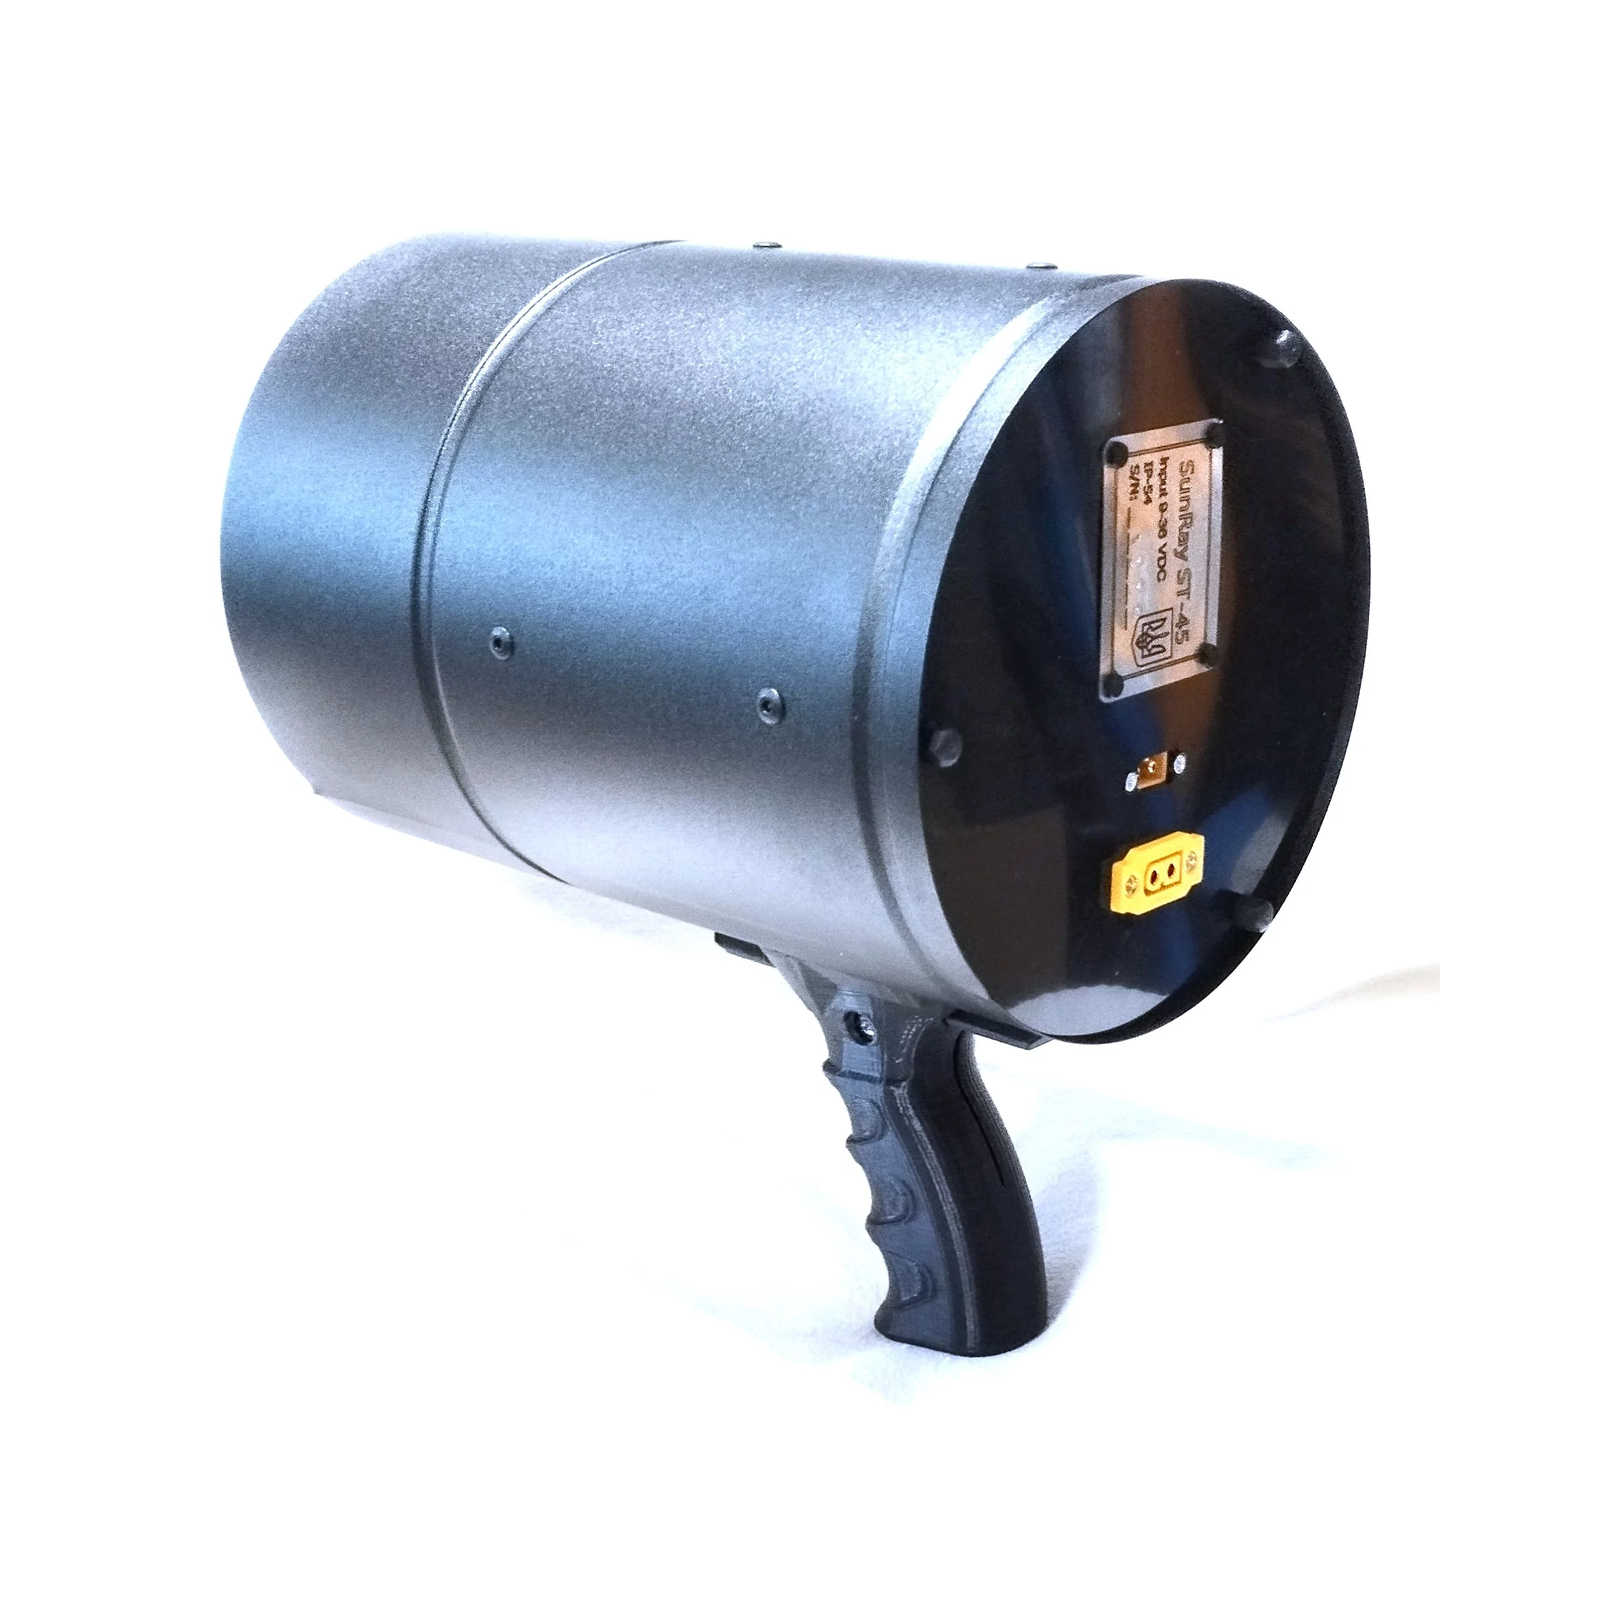 Зенитный прожектор Ловець Шахедів спеціальний пошуковий ручний (ЗПР-45) изображение 3